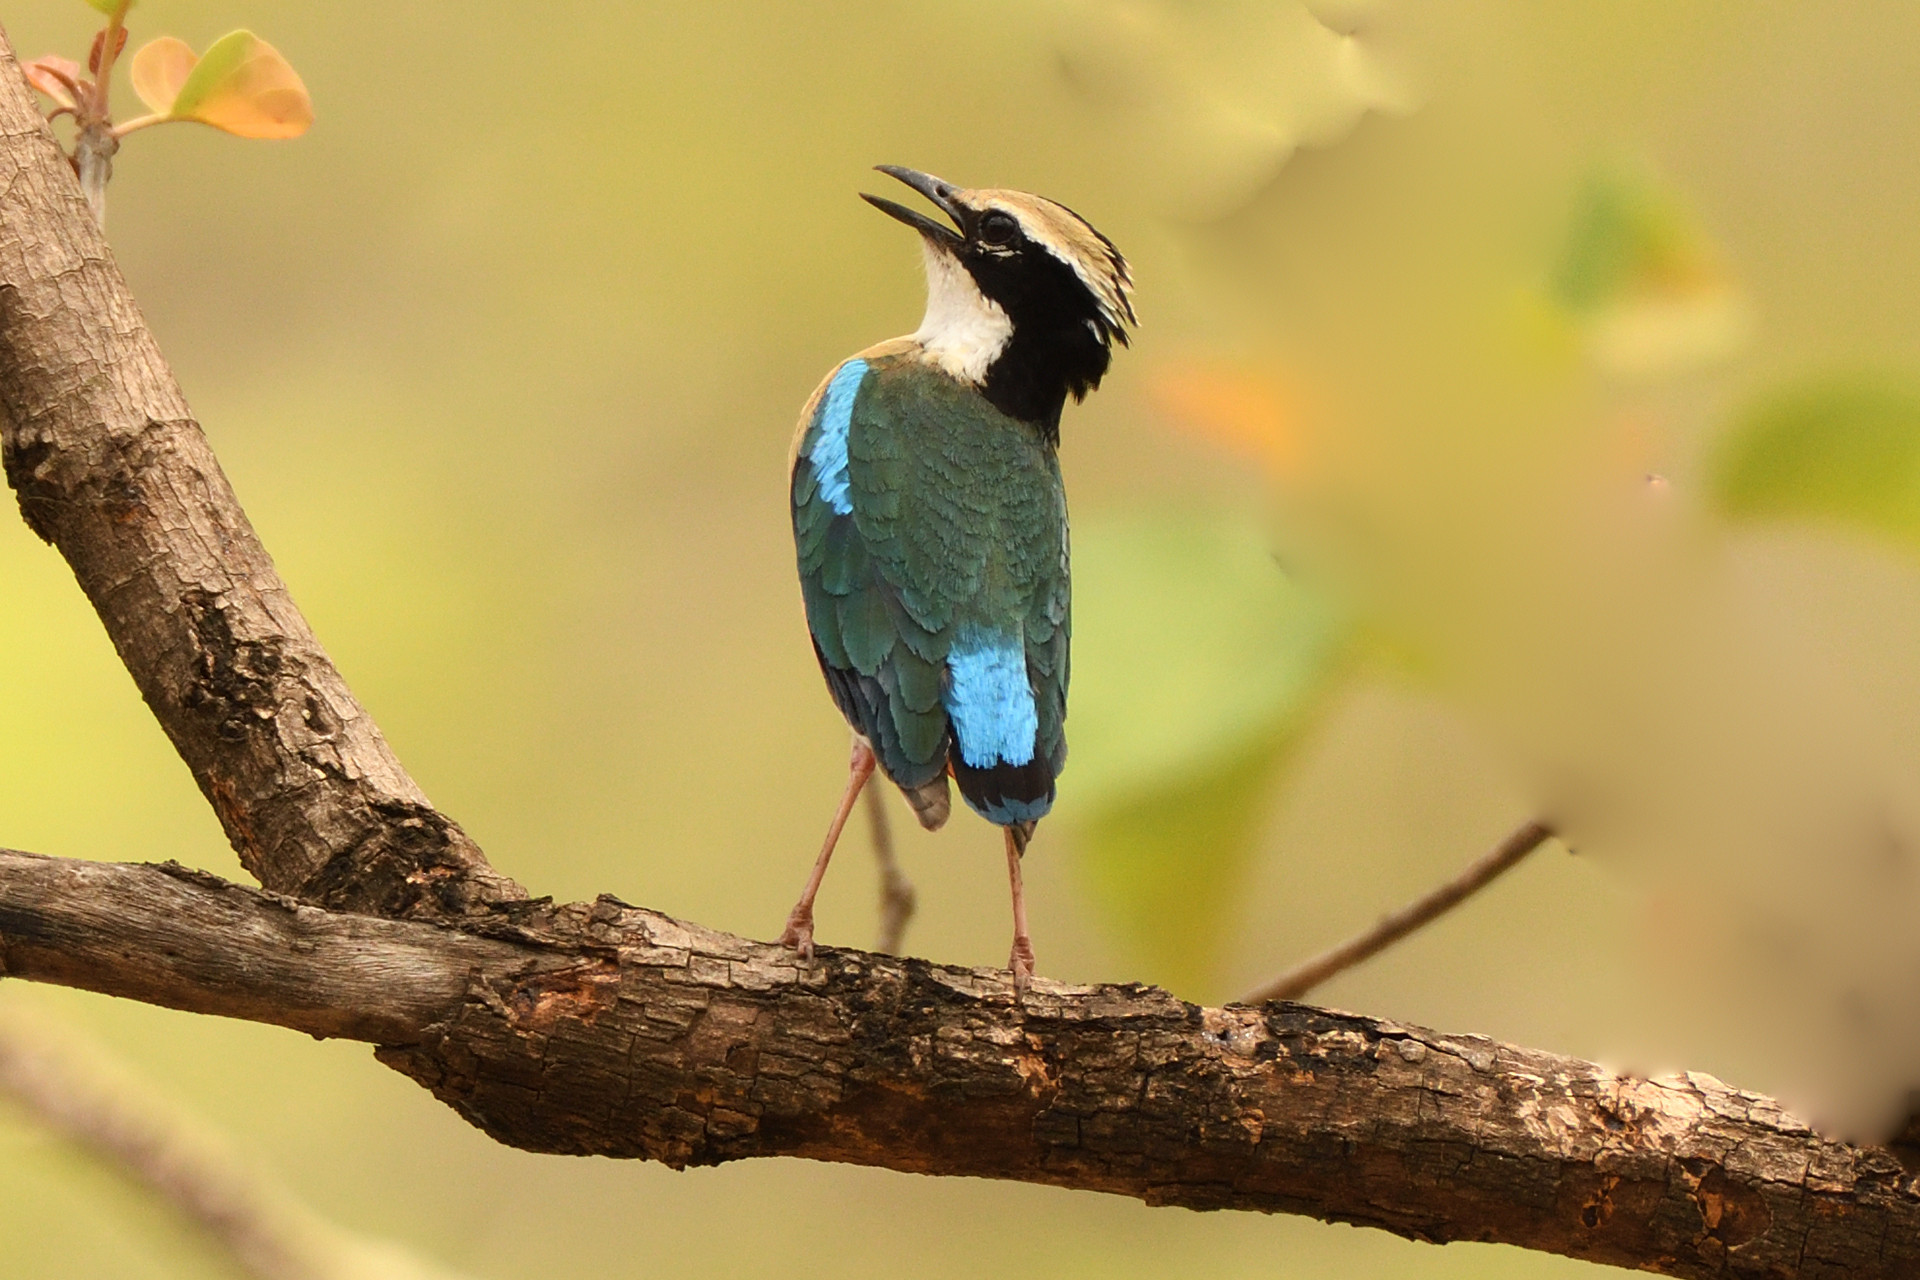 Top 13 Places To Go Bird Watching In Indore, Madhya Pradesh | Nature inFocus